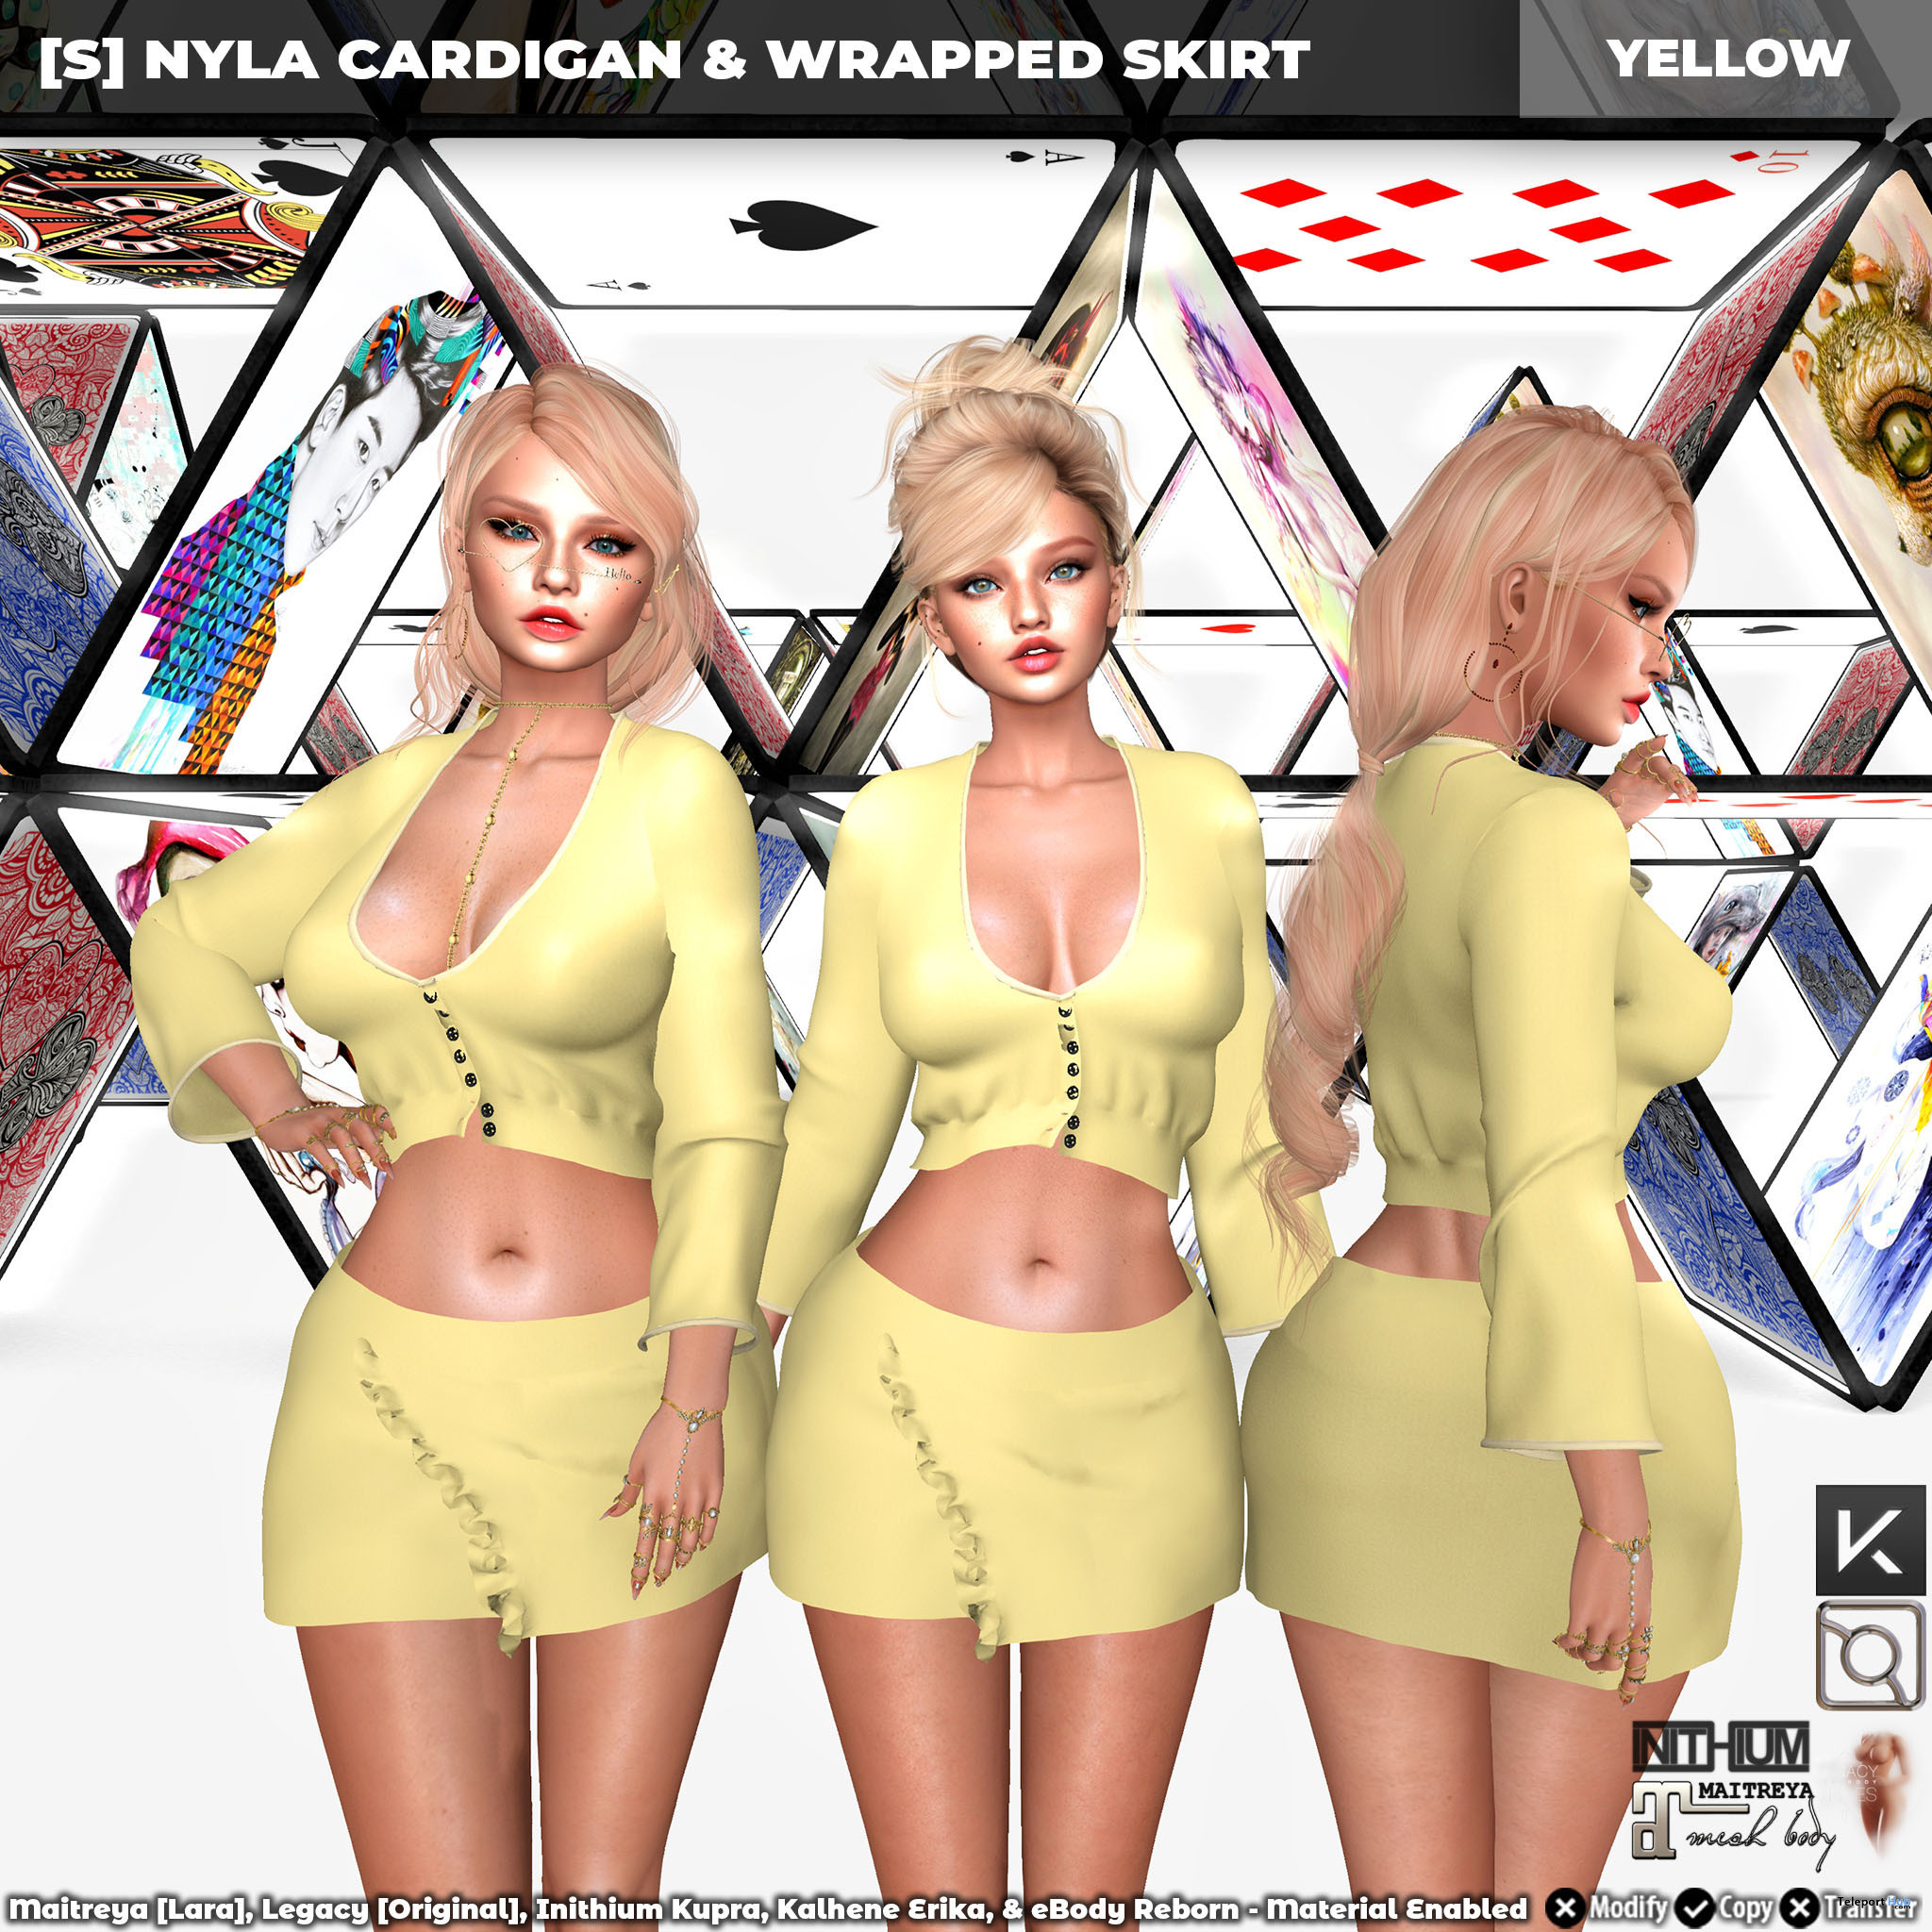 New Release: [S] Nyla Cardigan & Wrapped Skirt by [satus Inc] - Teleport Hub - teleporthub.com